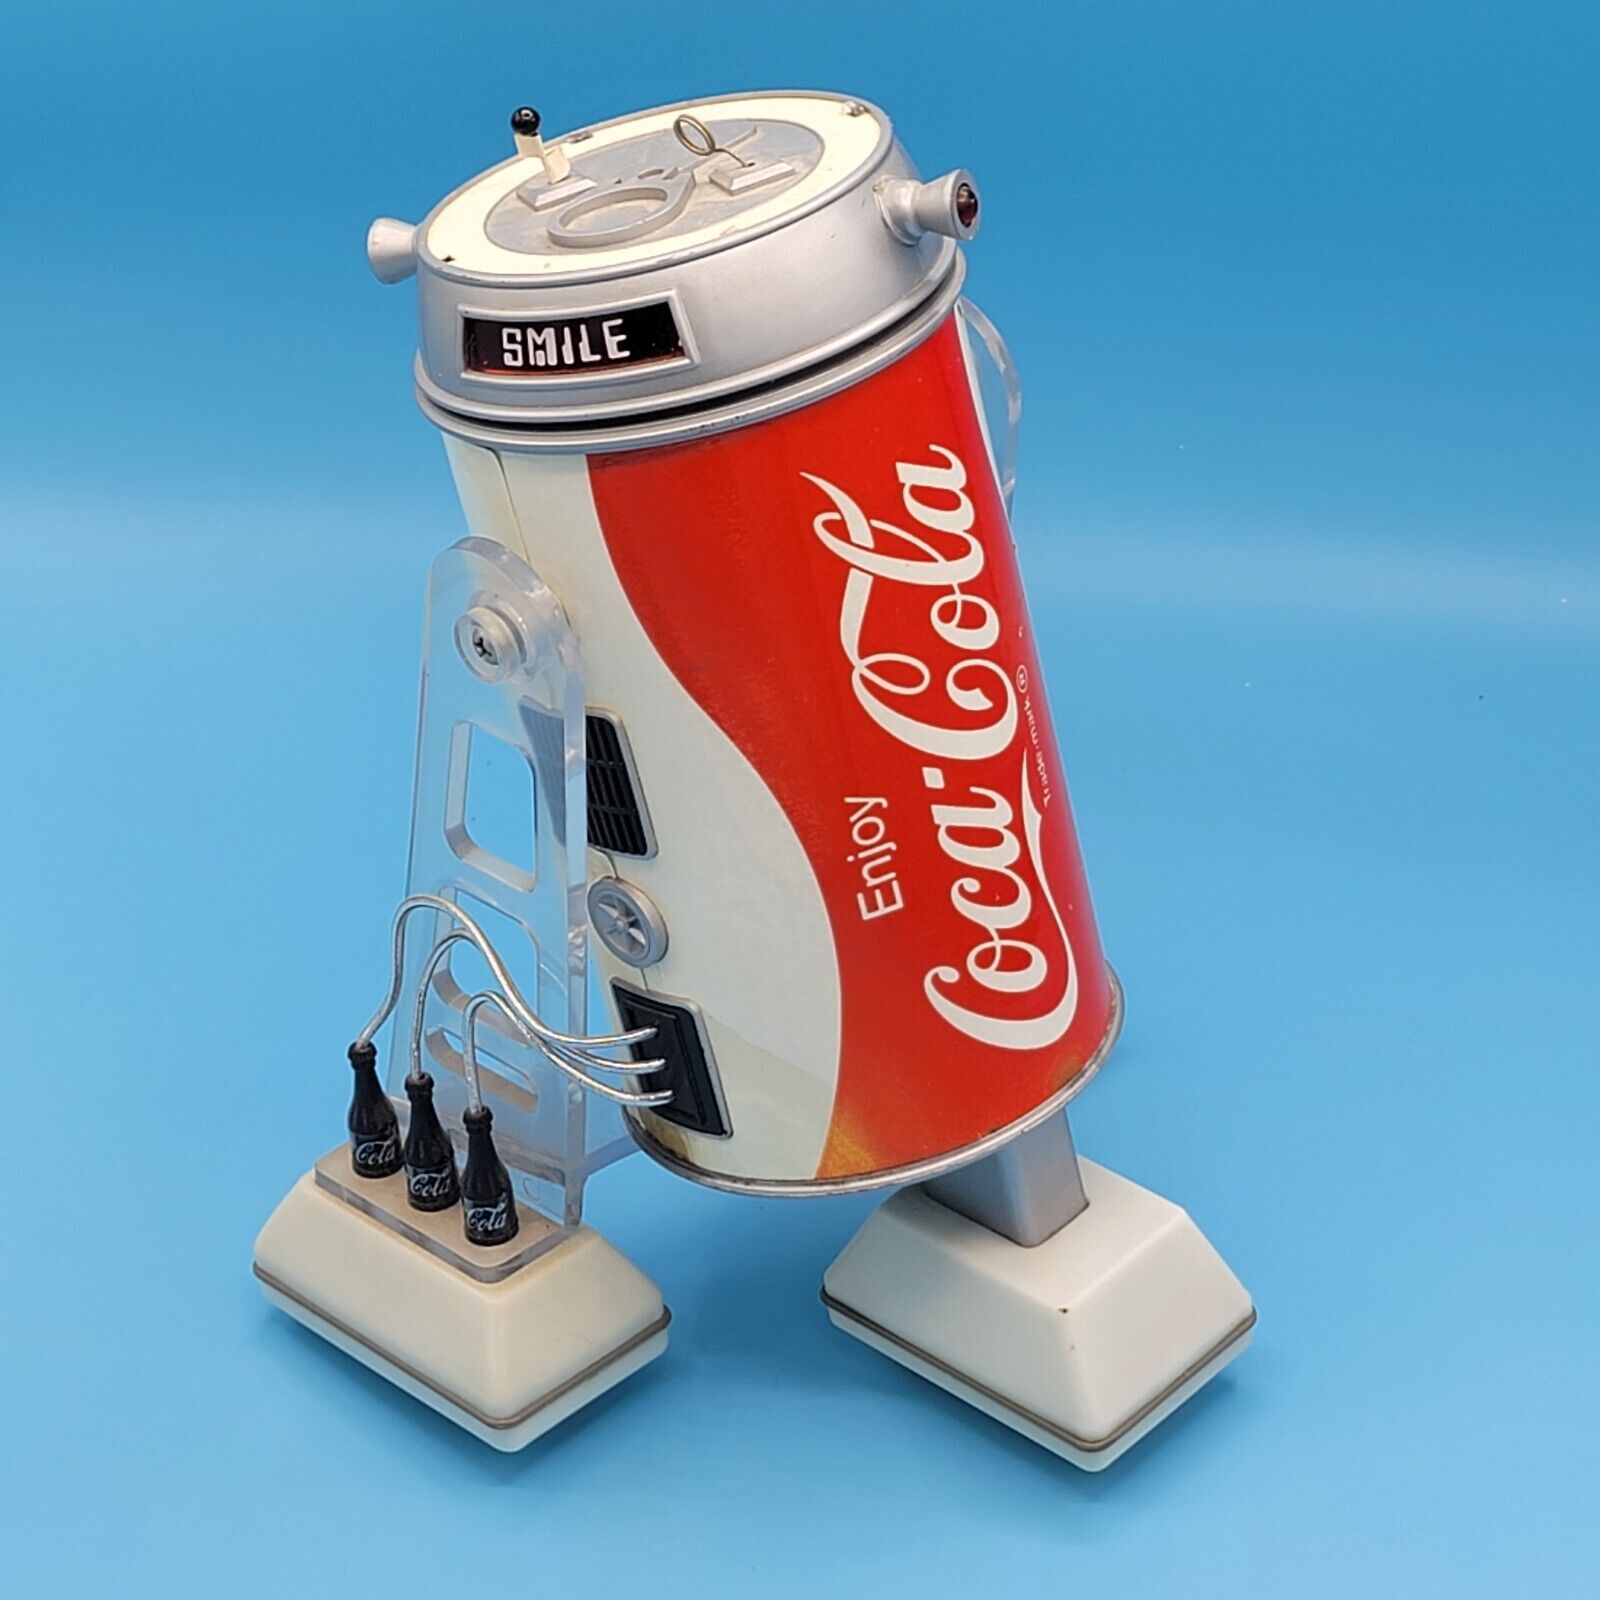 Coca Cola COBOT  R2-D2 Robot Toy Star Wars - Vintage 1977 / 1979 Very Rare